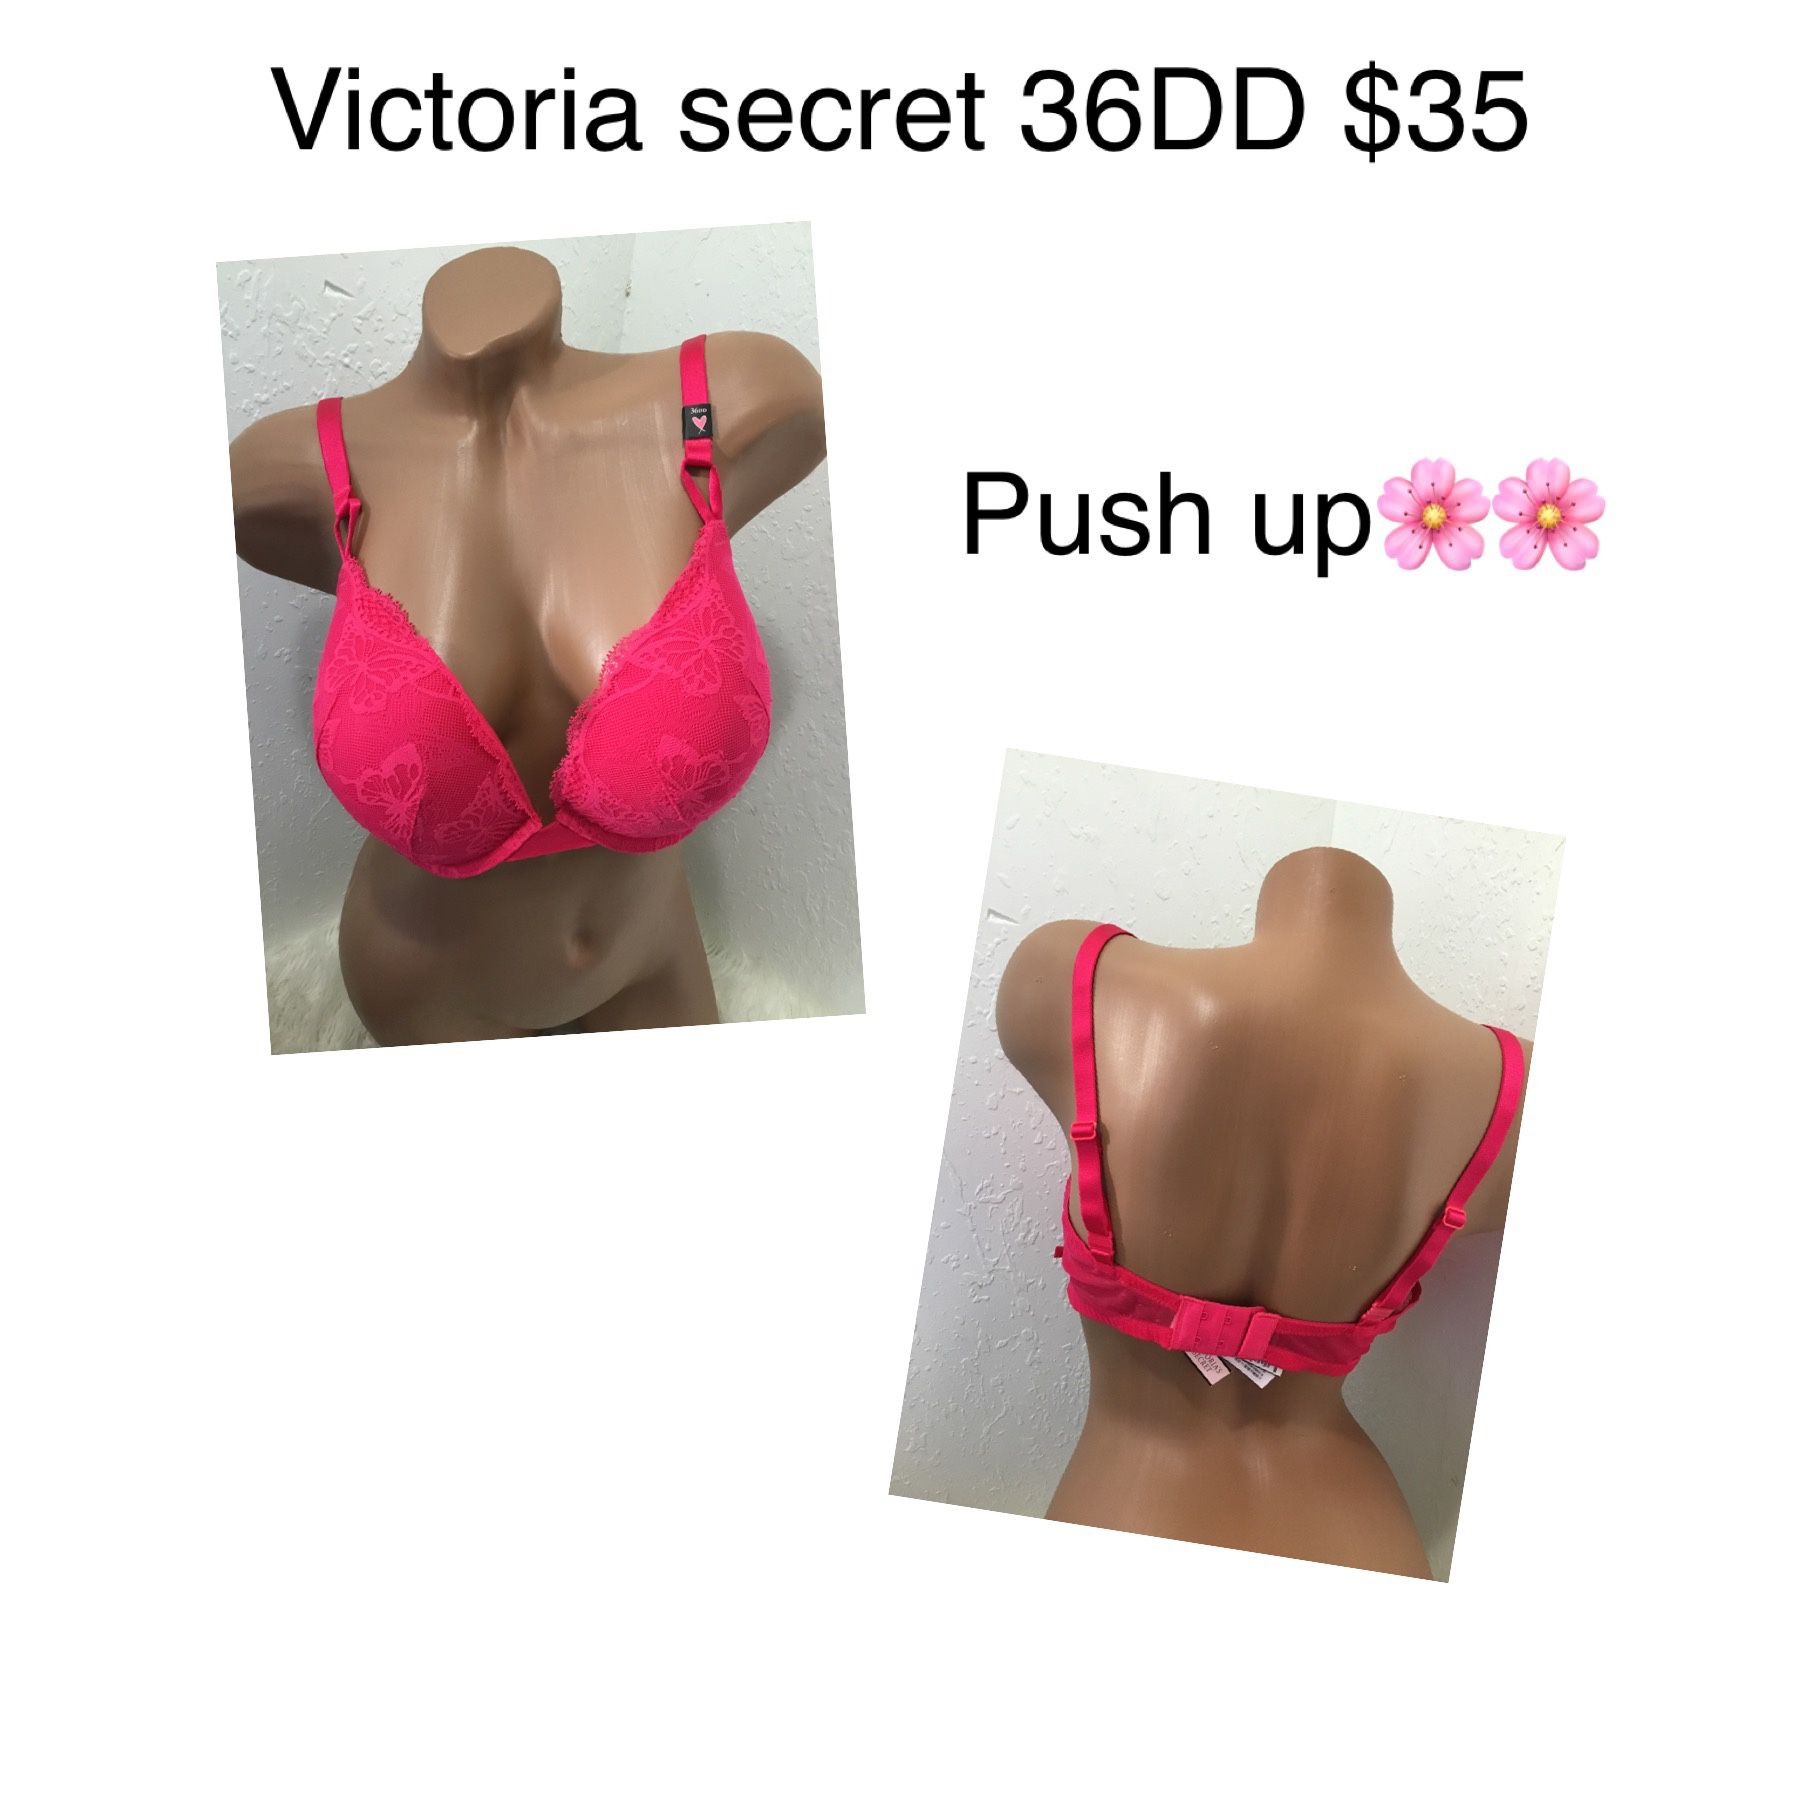 VSX Victoria Secret Sports Bra for Sale in Willowbrook, KS - OfferUp